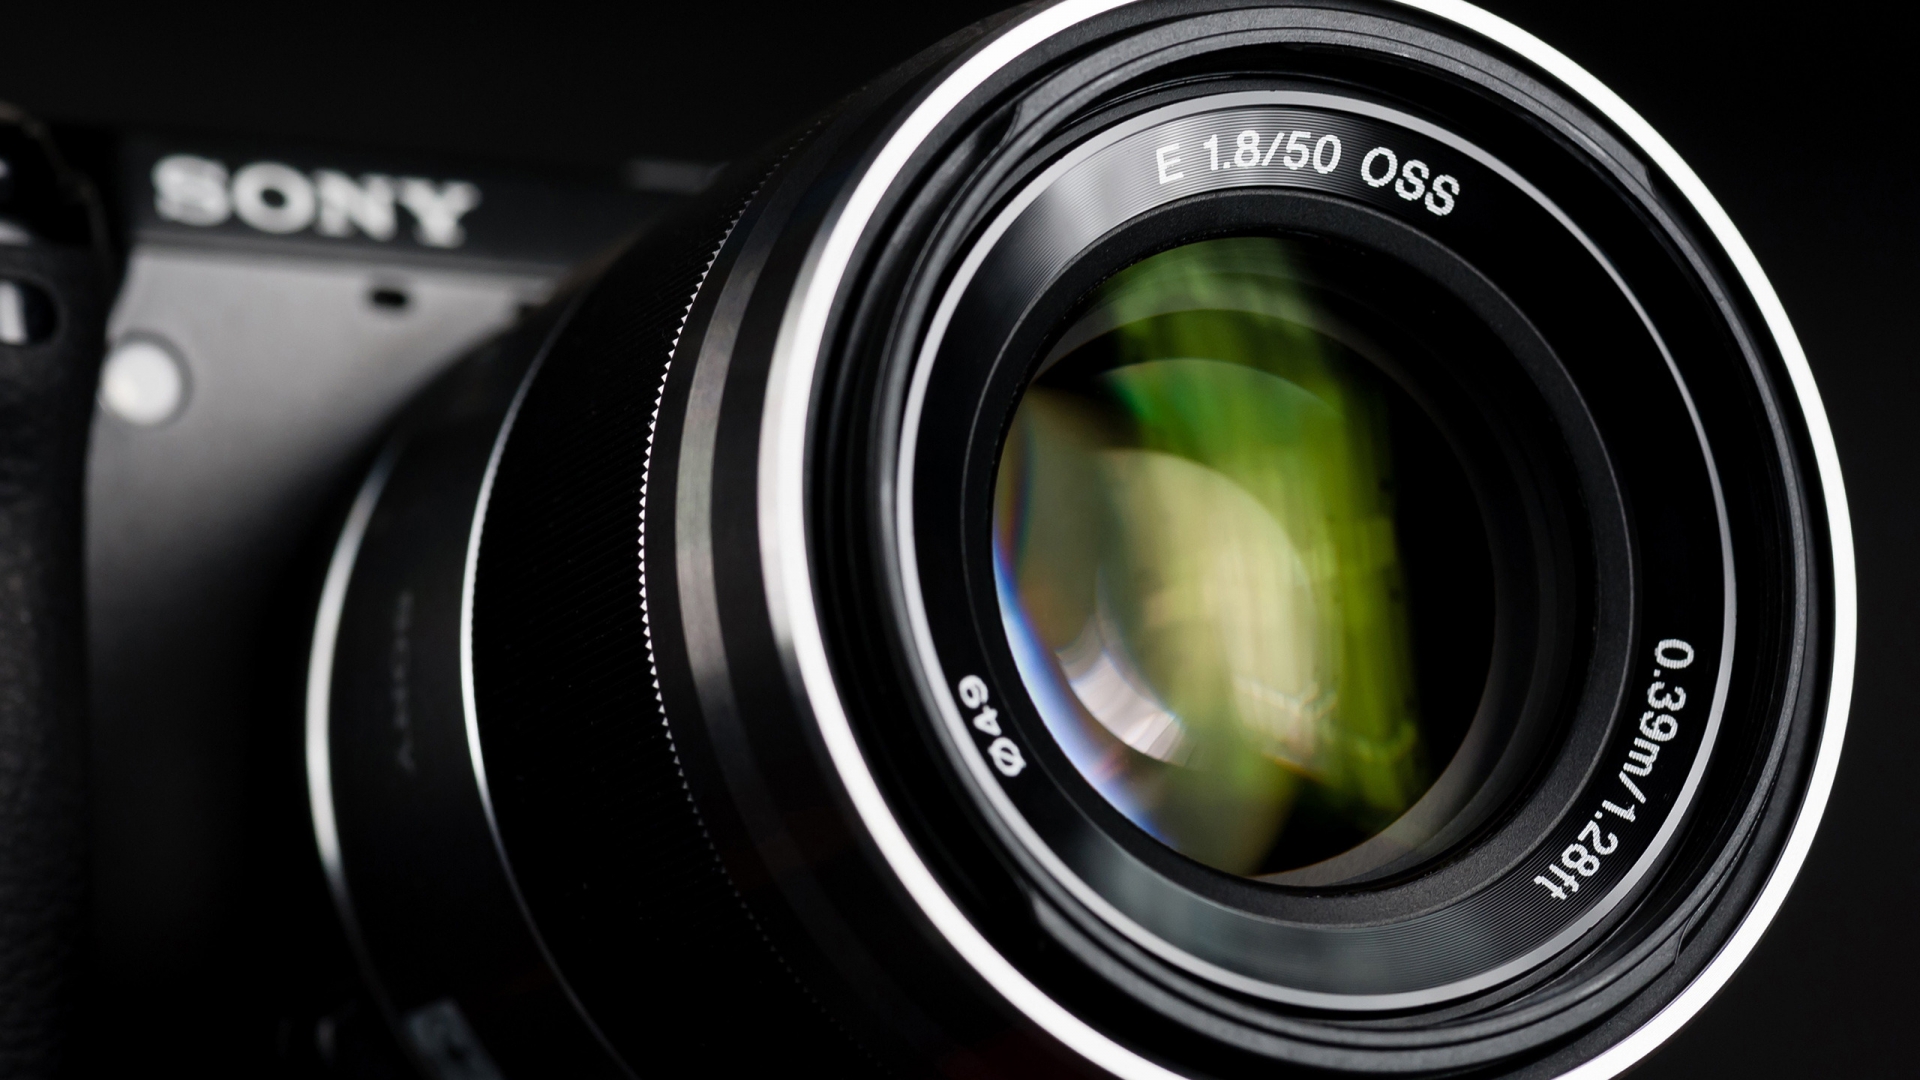 Sony Camera Lens for 1920 x 1080 HDTV 1080p resolution